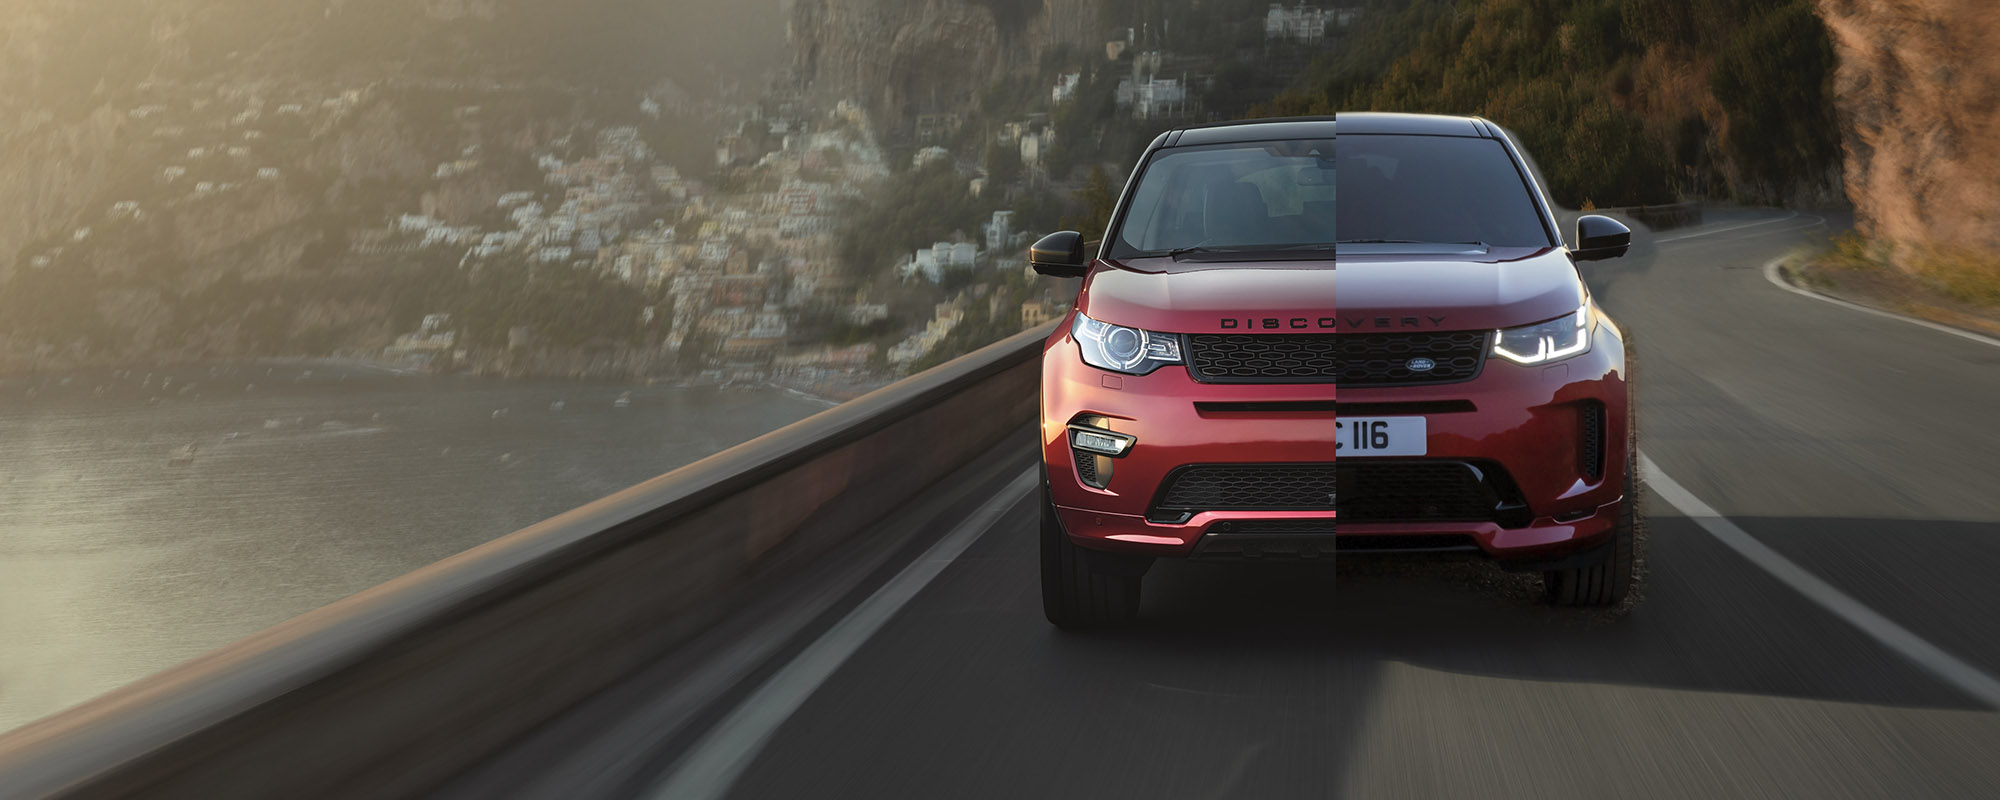 Vergleich 2018 Vs 2020 Land Rover Discovery Sport Autofilou